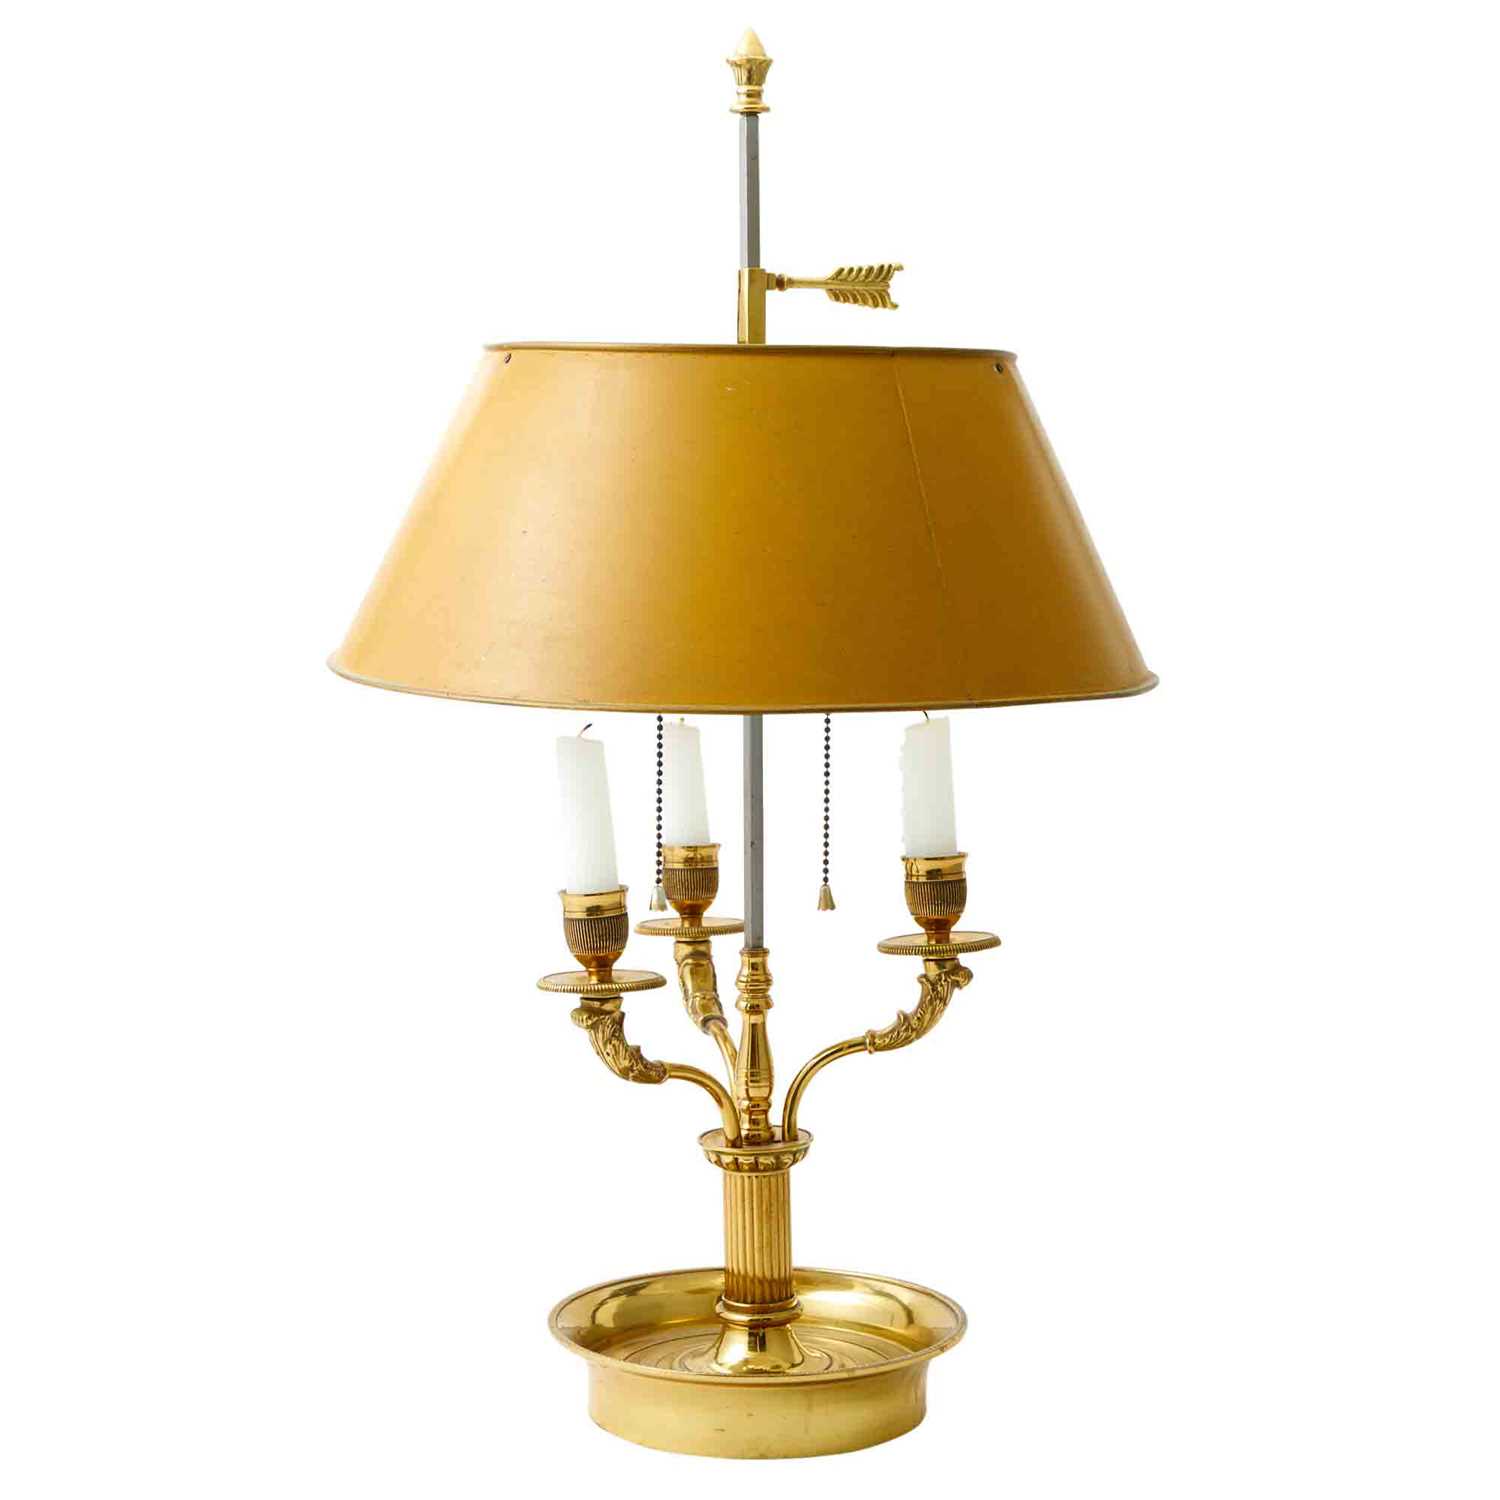 Lot 243 - Empire Style Brass Bouillotte Lamp